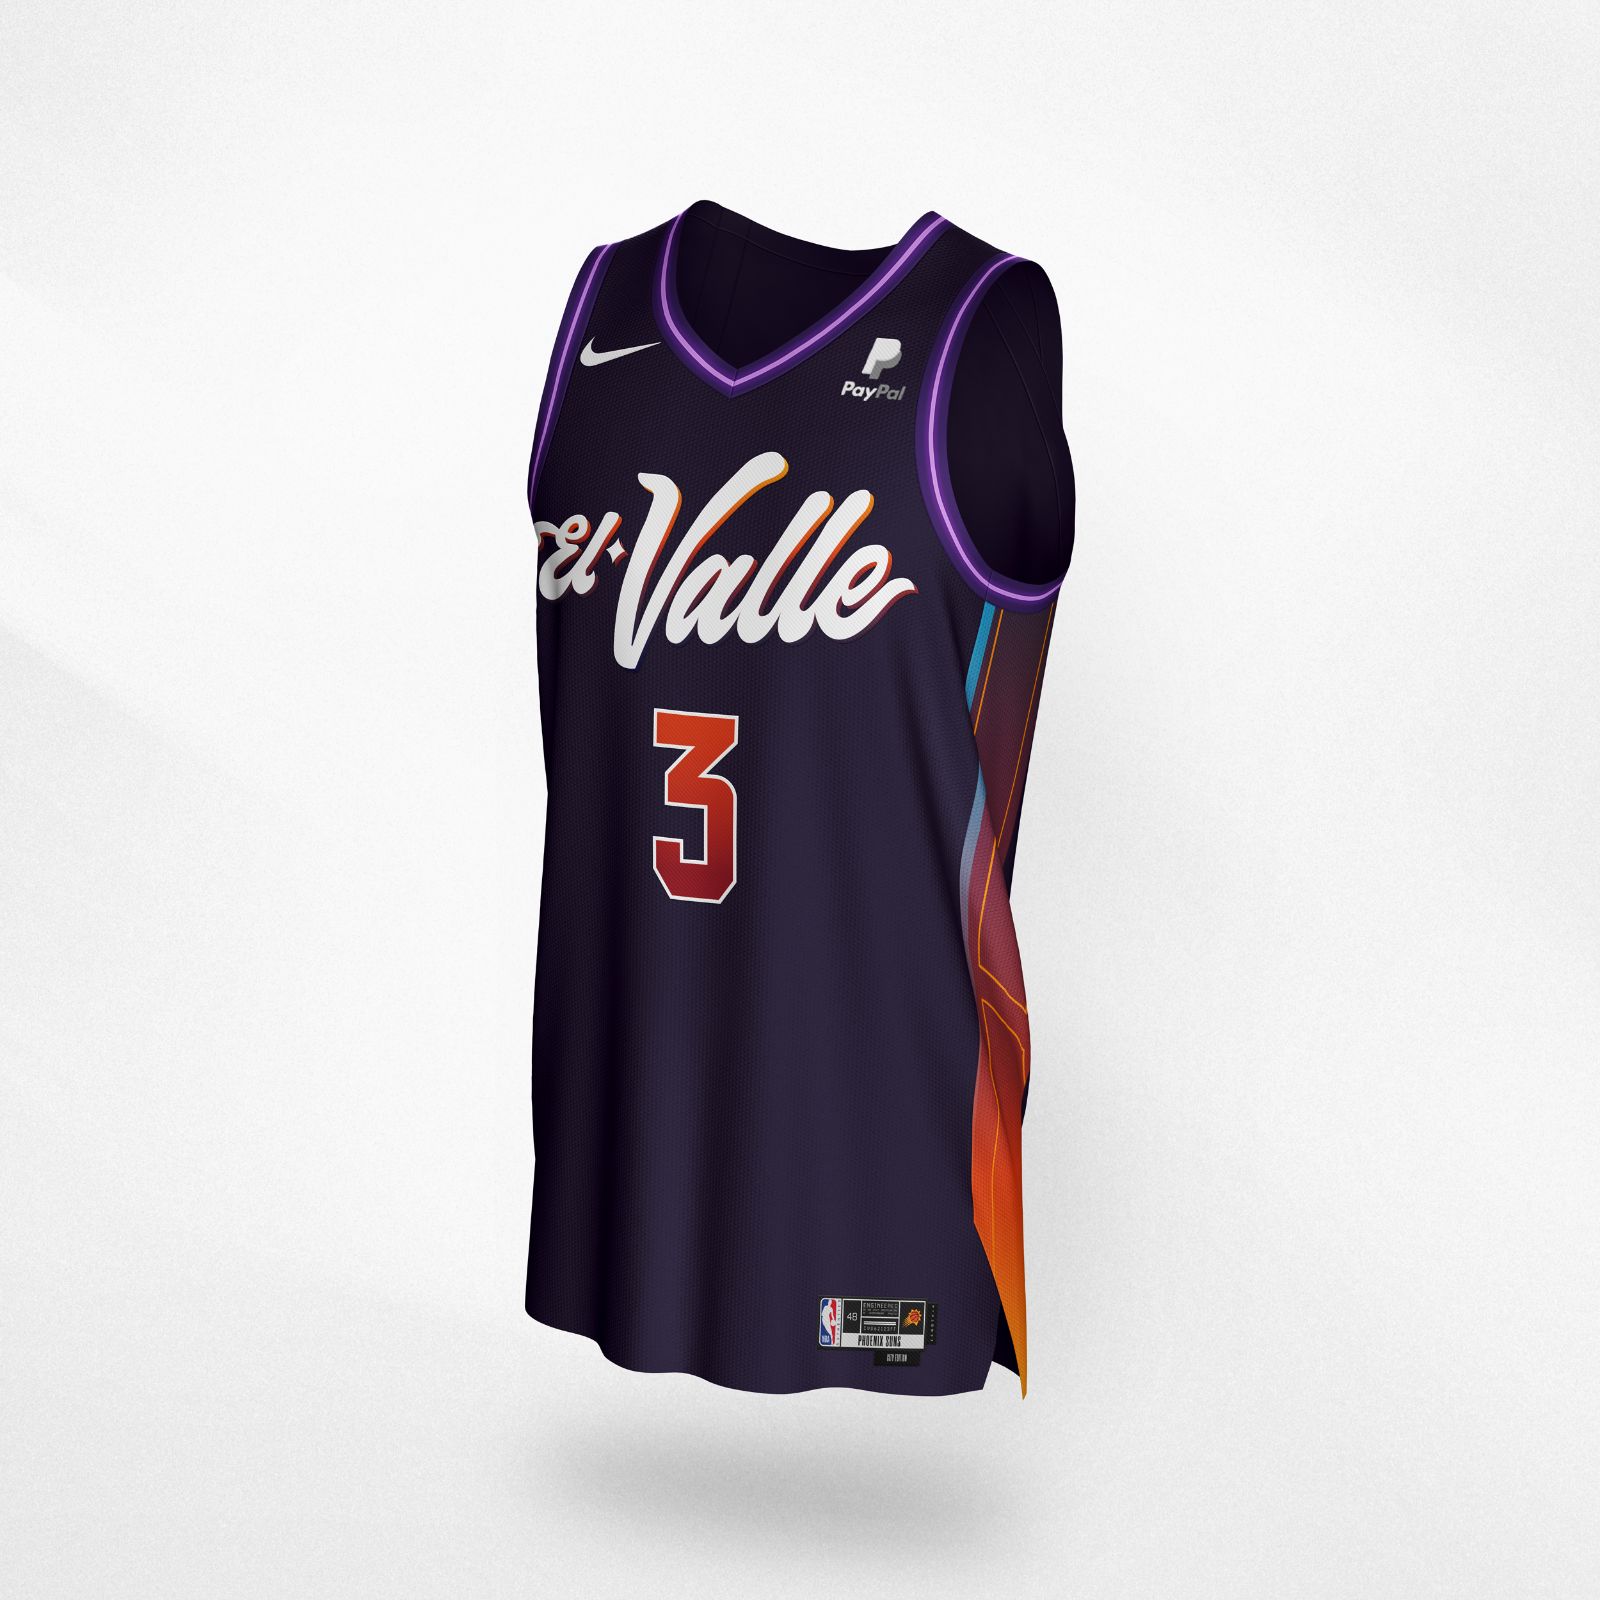 Phoenix Suns 'The Valley' City Edition uniforms reportedly leak